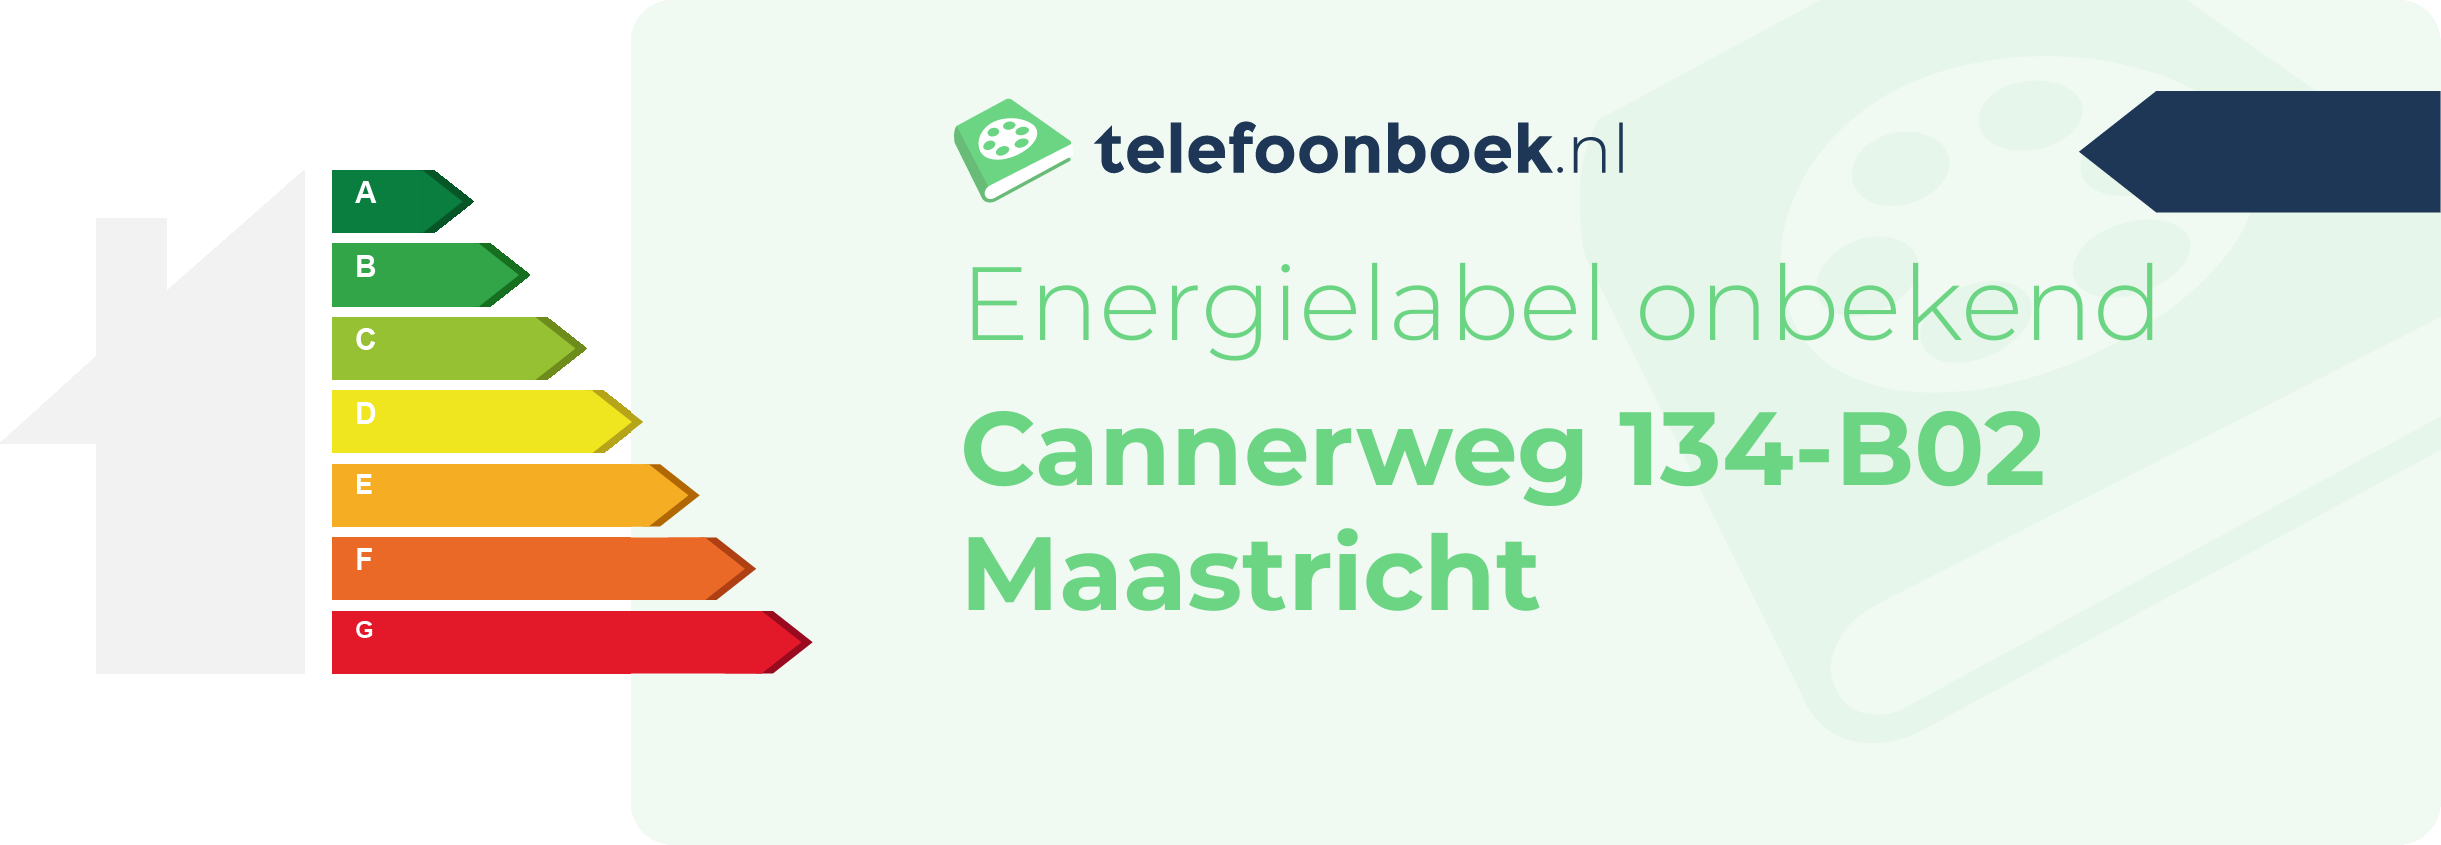 Energielabel Cannerweg 134-B02 Maastricht